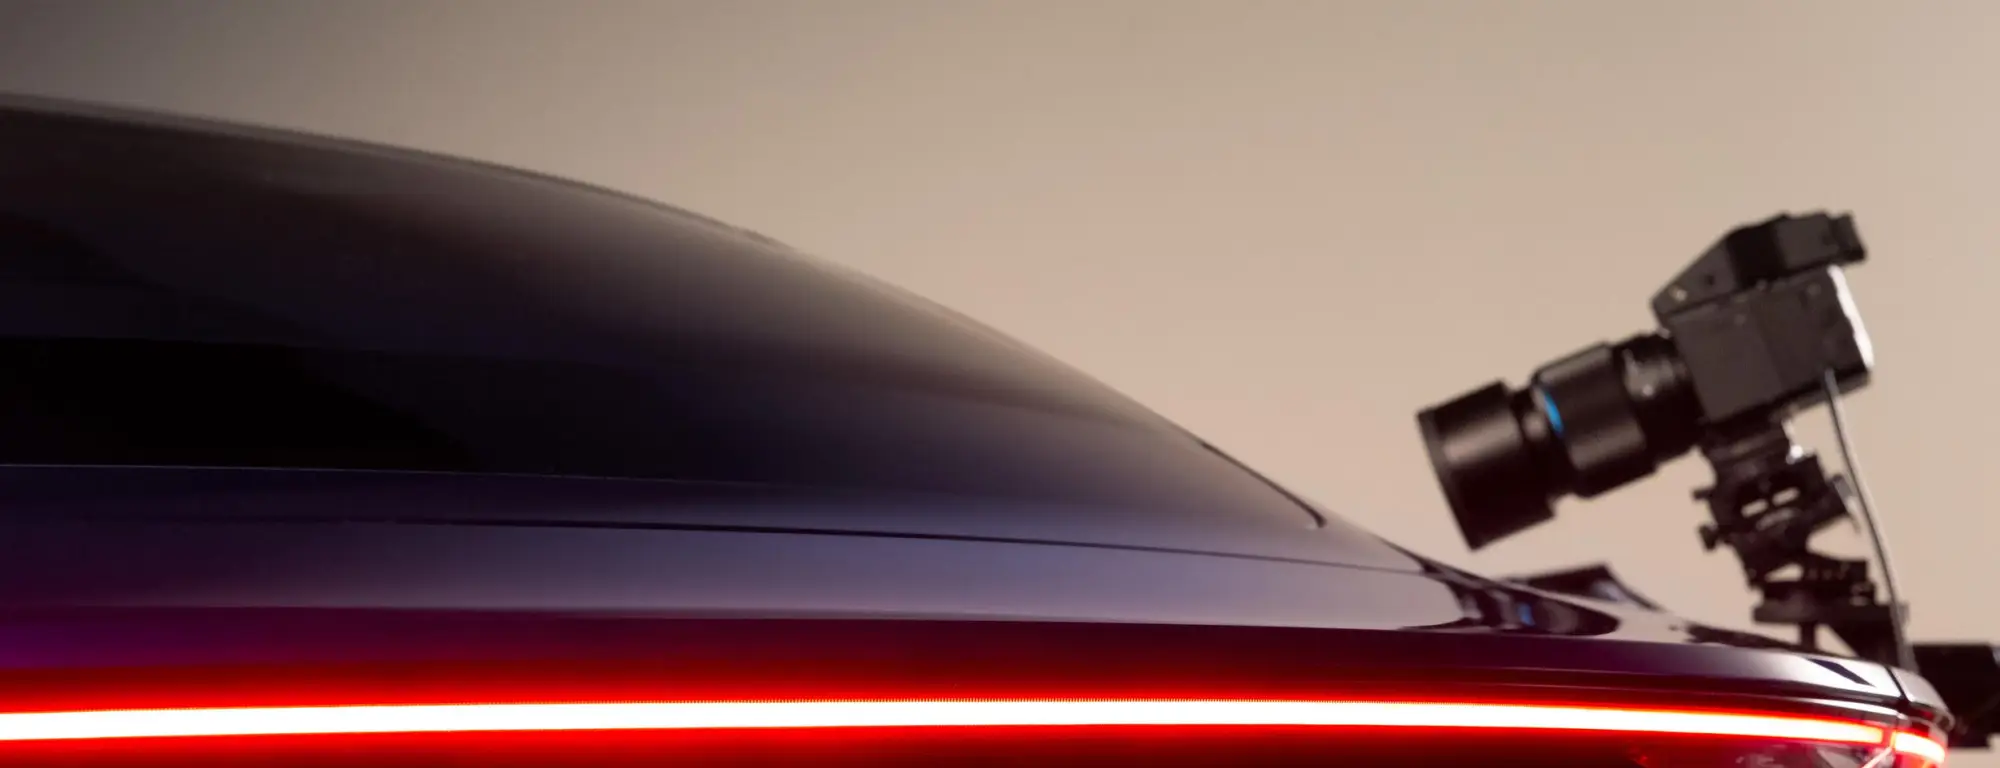 Porsche Taycan - Teaser finali - 7